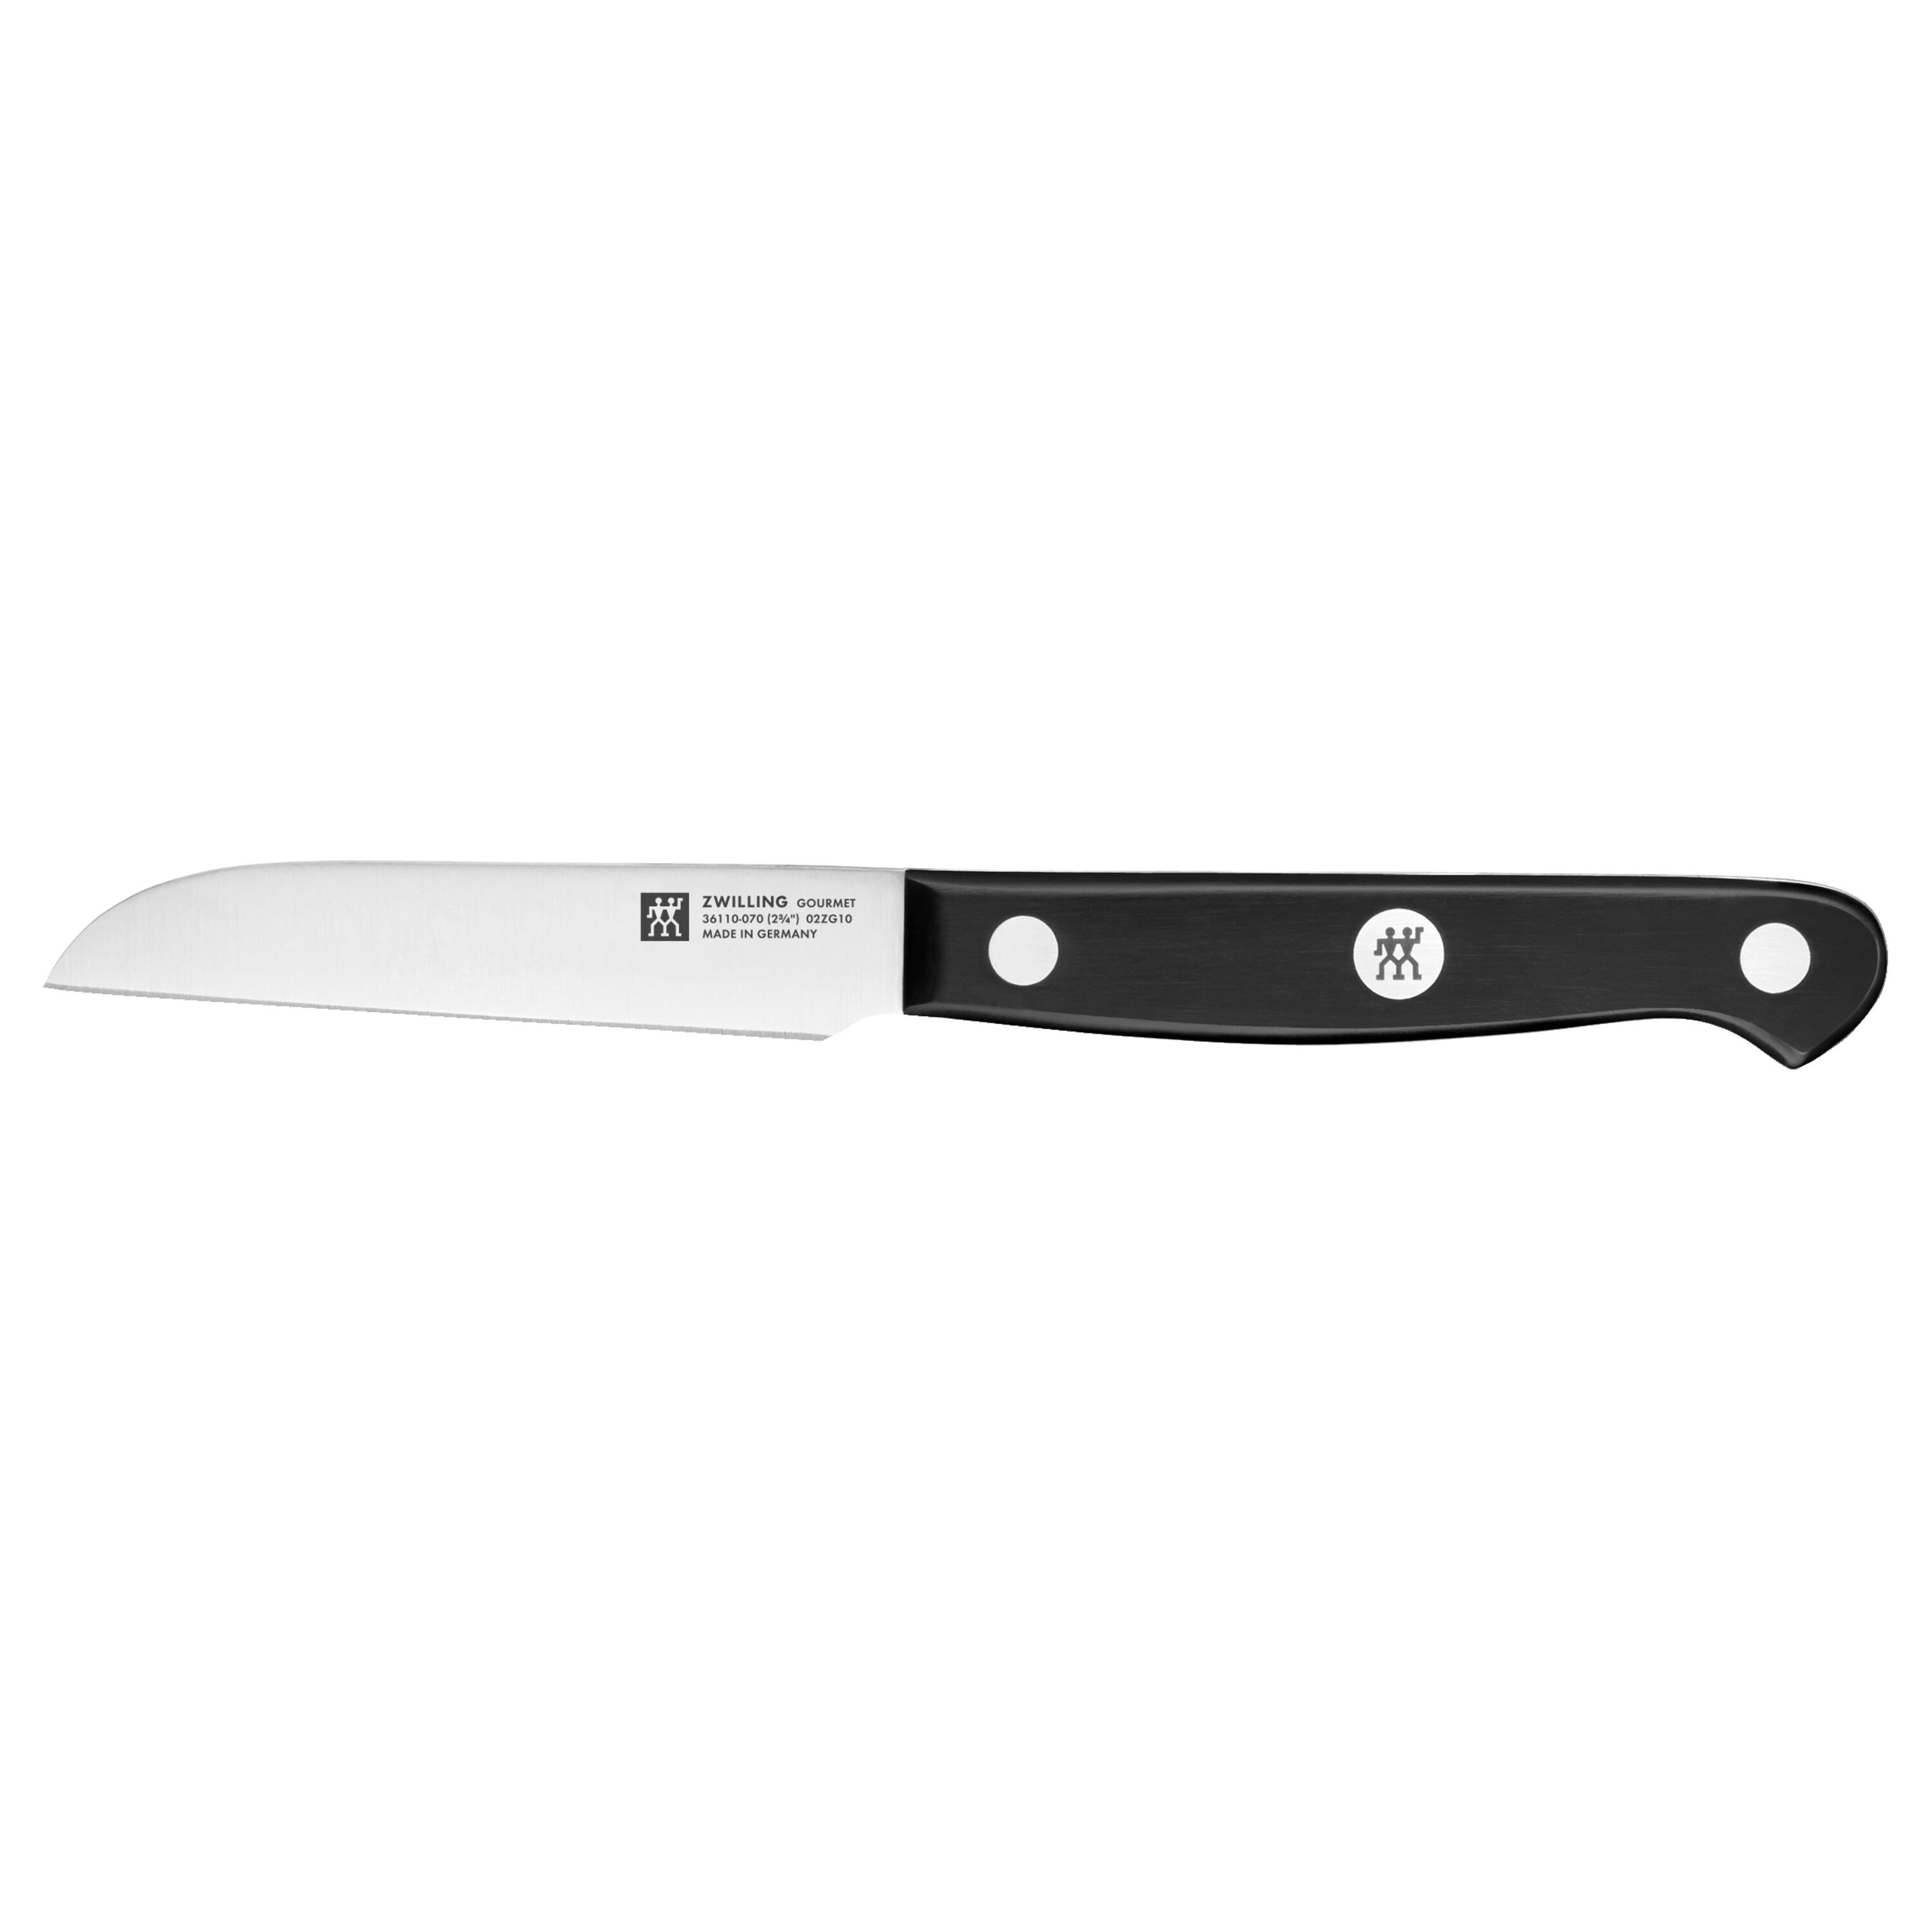  HENCKELS Graphite 14-pc Self-Sharpening Knife Set with Block,  Chef Knife, Paring Knife, Utility Knife, Bread Knife, Steak Knife, Black,  Stainless Steel : Everything Else